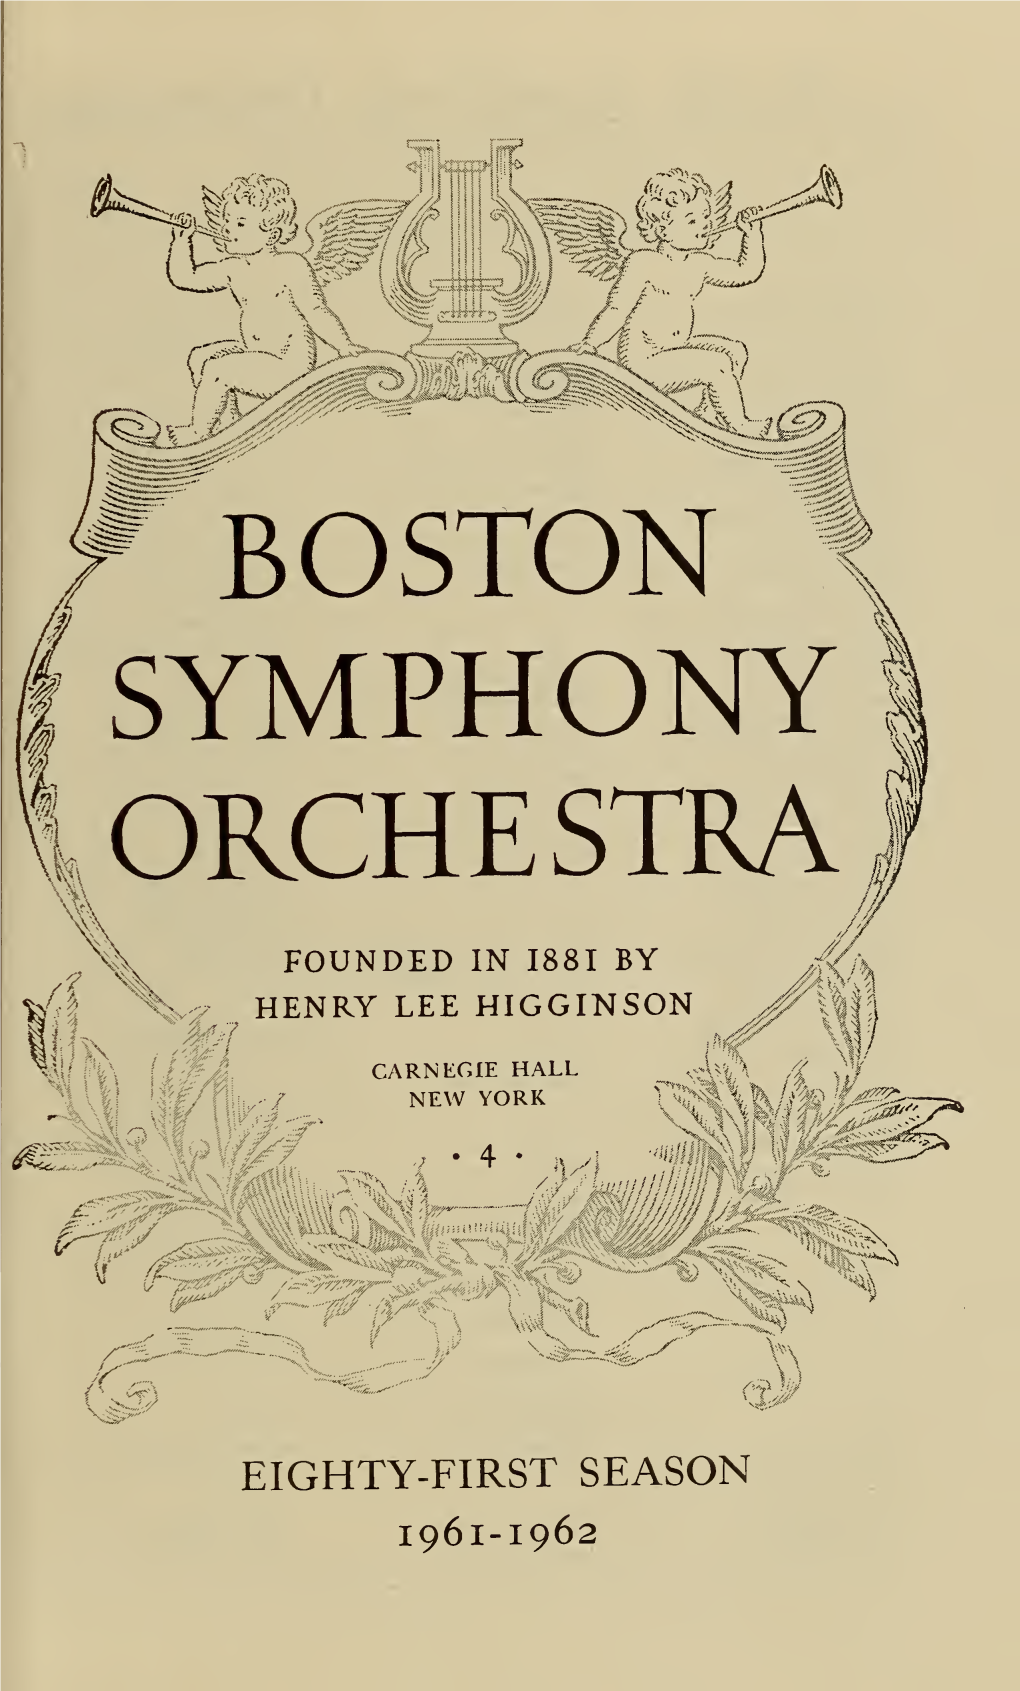 Boston Symphony Orchestra Concert Programs, Season 81, 1961-1962